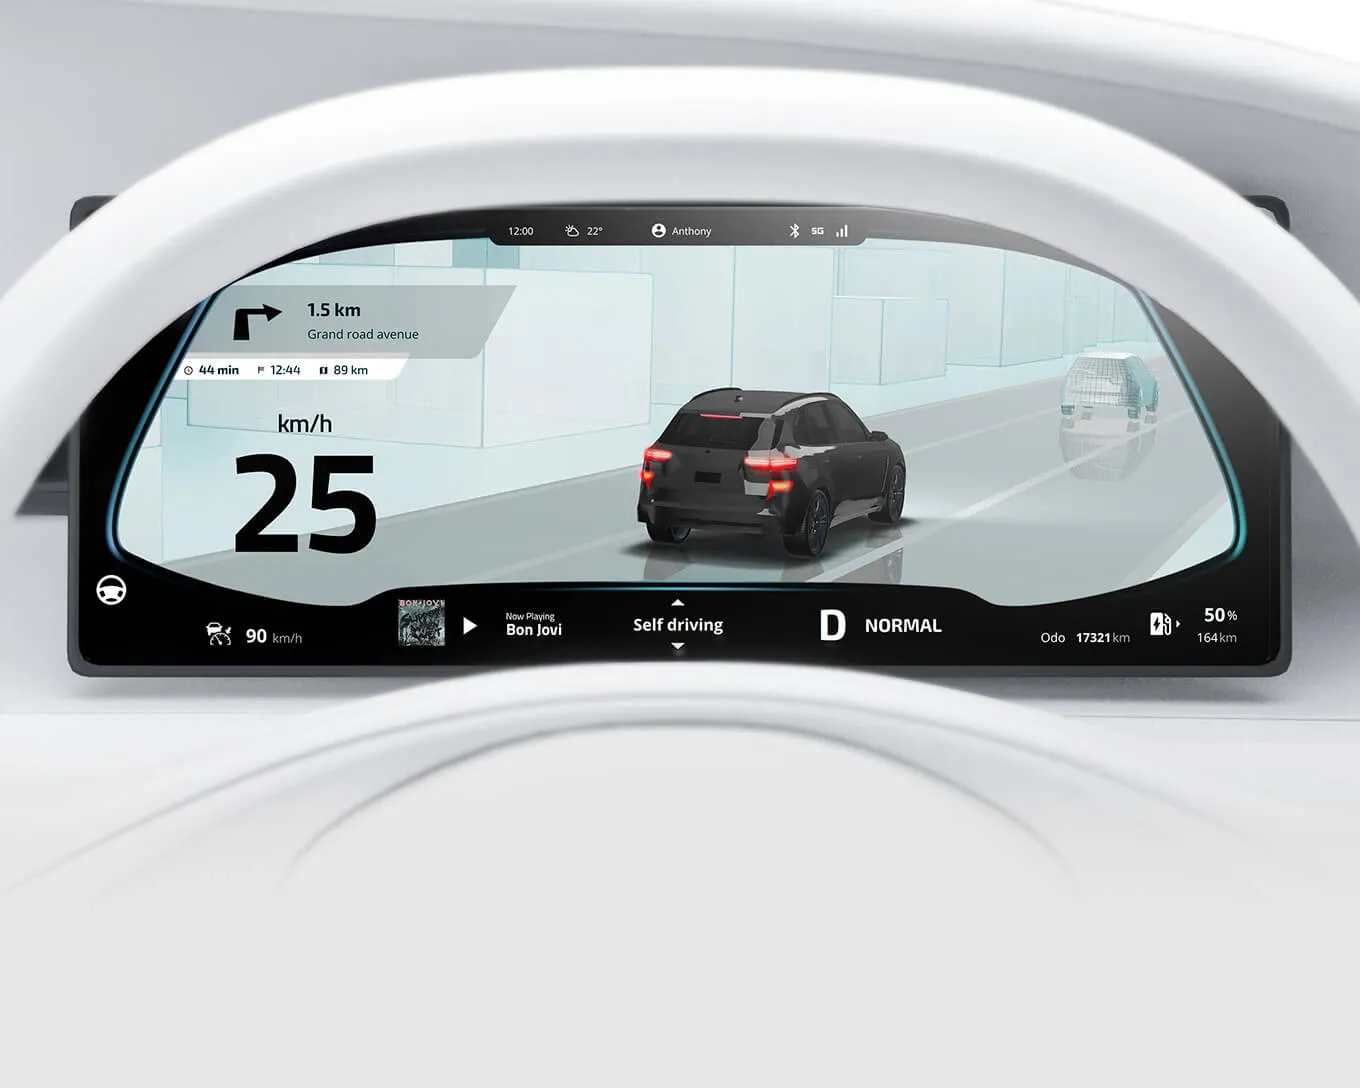 LCD Dashboard Display in Cars: All-LCD Dashboard Development